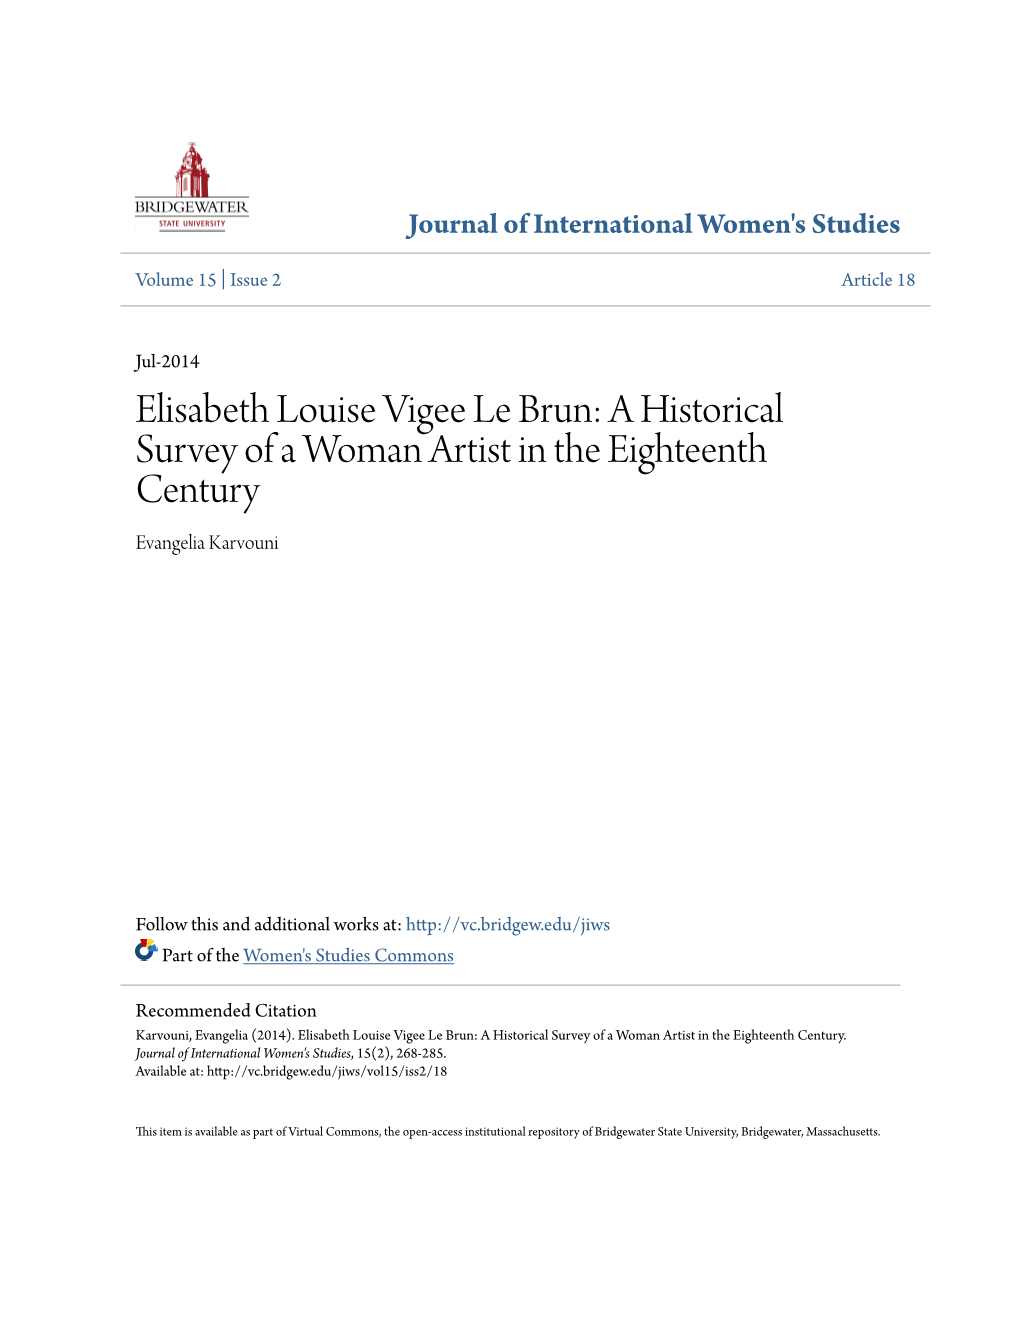 Elisabeth Louise Vigee Le Brun: a Historical Survey of a Woman Artist in the Eighteenth Century Evangelia Karvouni